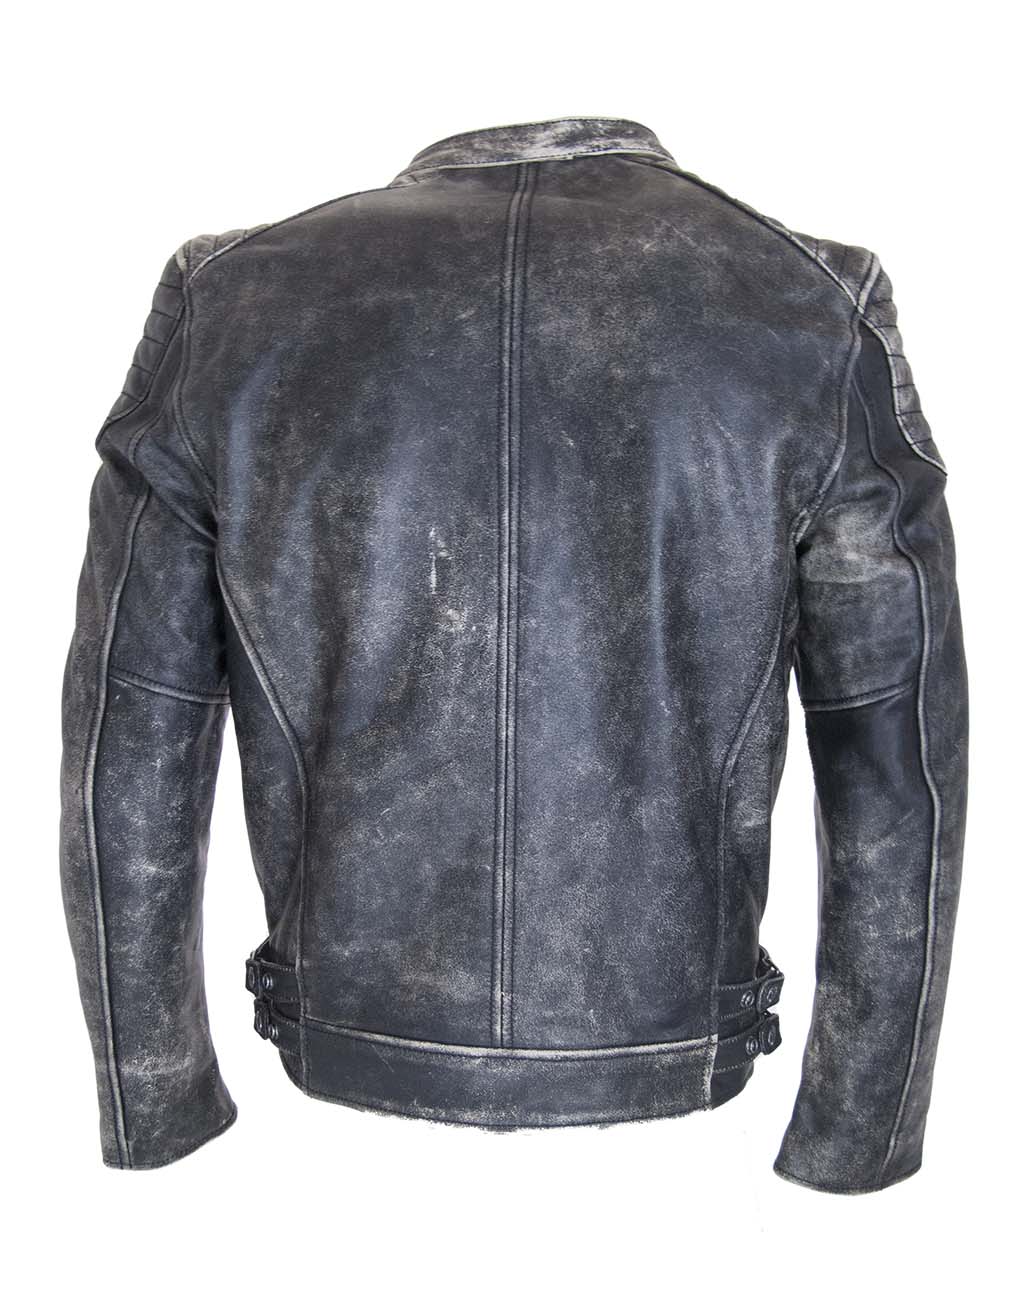 Schott mens leather jacket LC 3400 Grey BNWT by 100% Authentic Schott ...